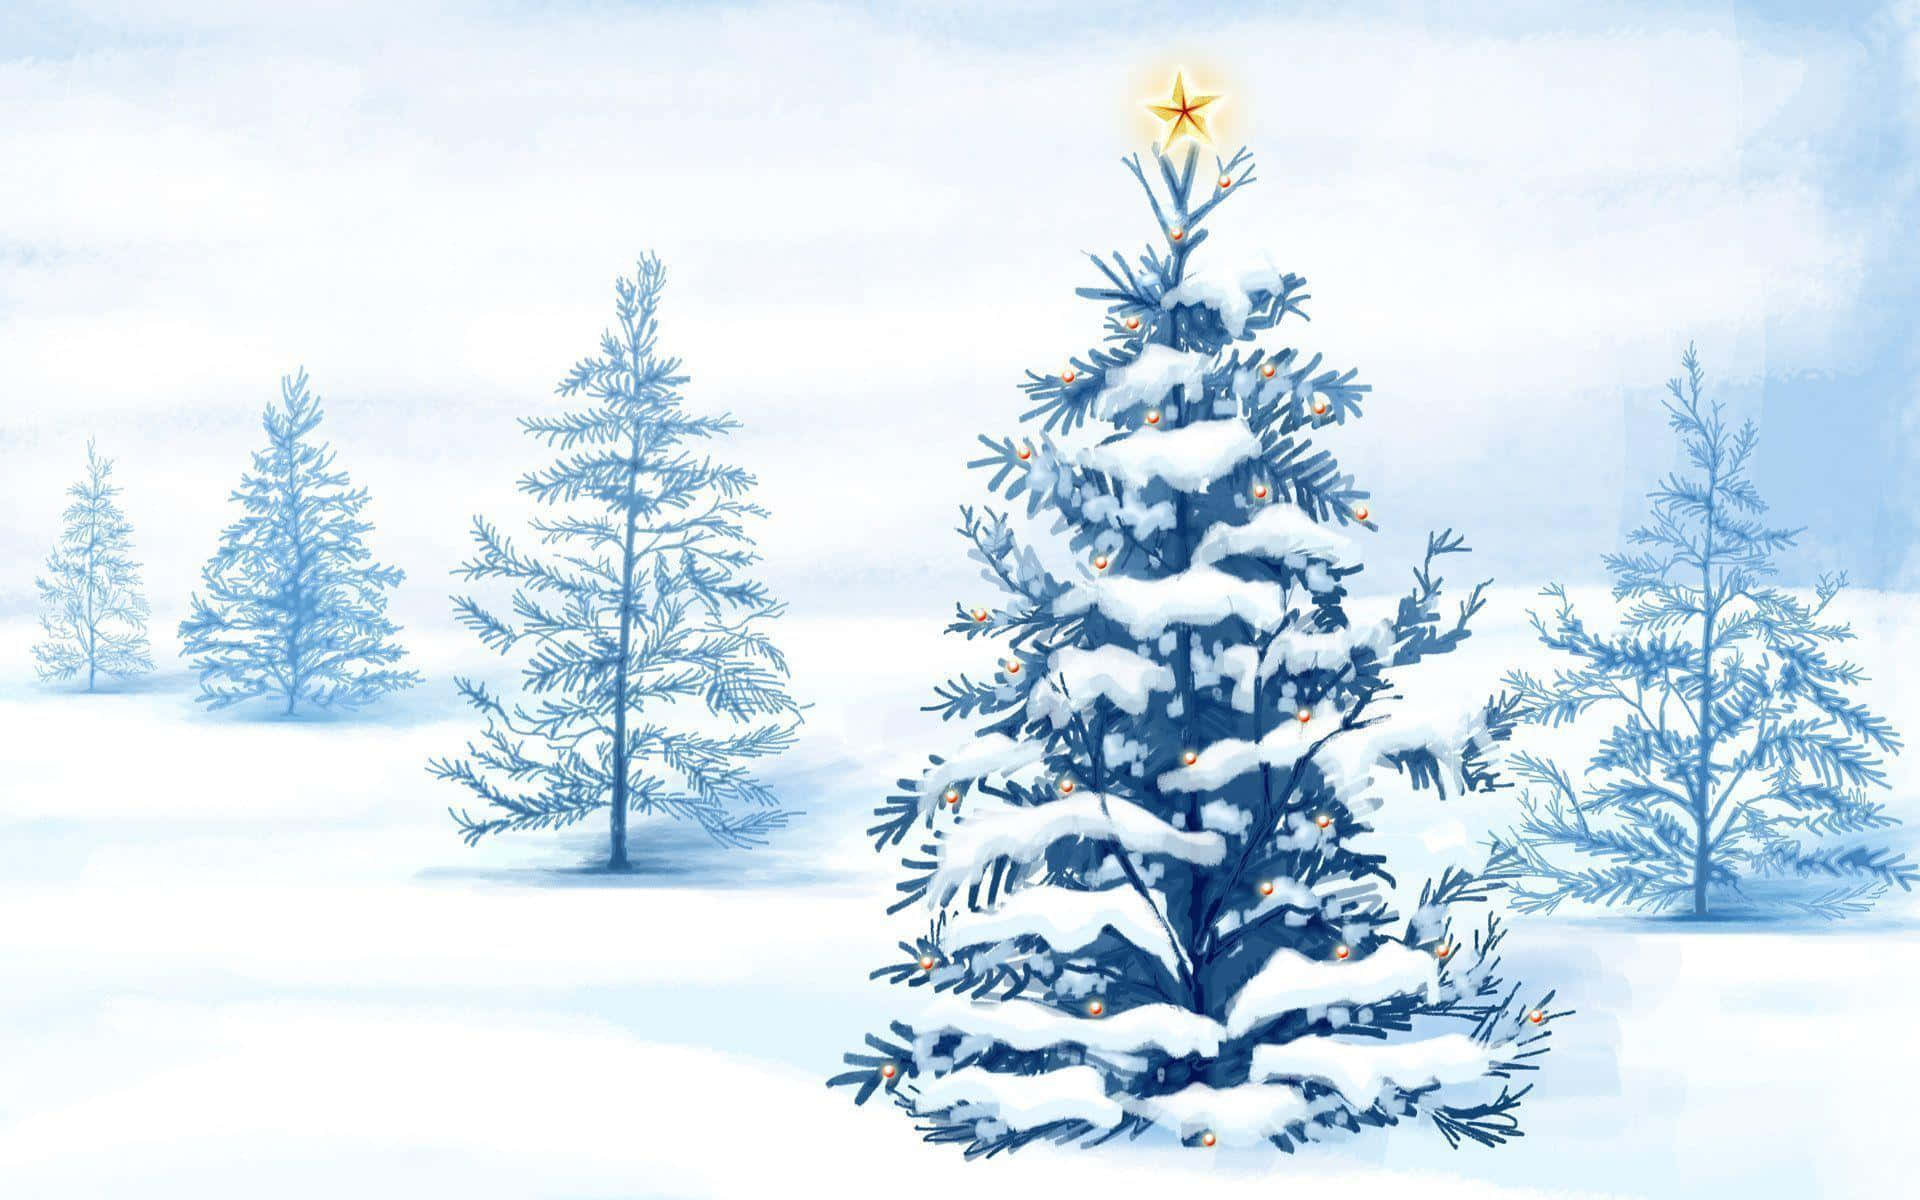 Enjoy a cozy and beautiful Snowy Christmas